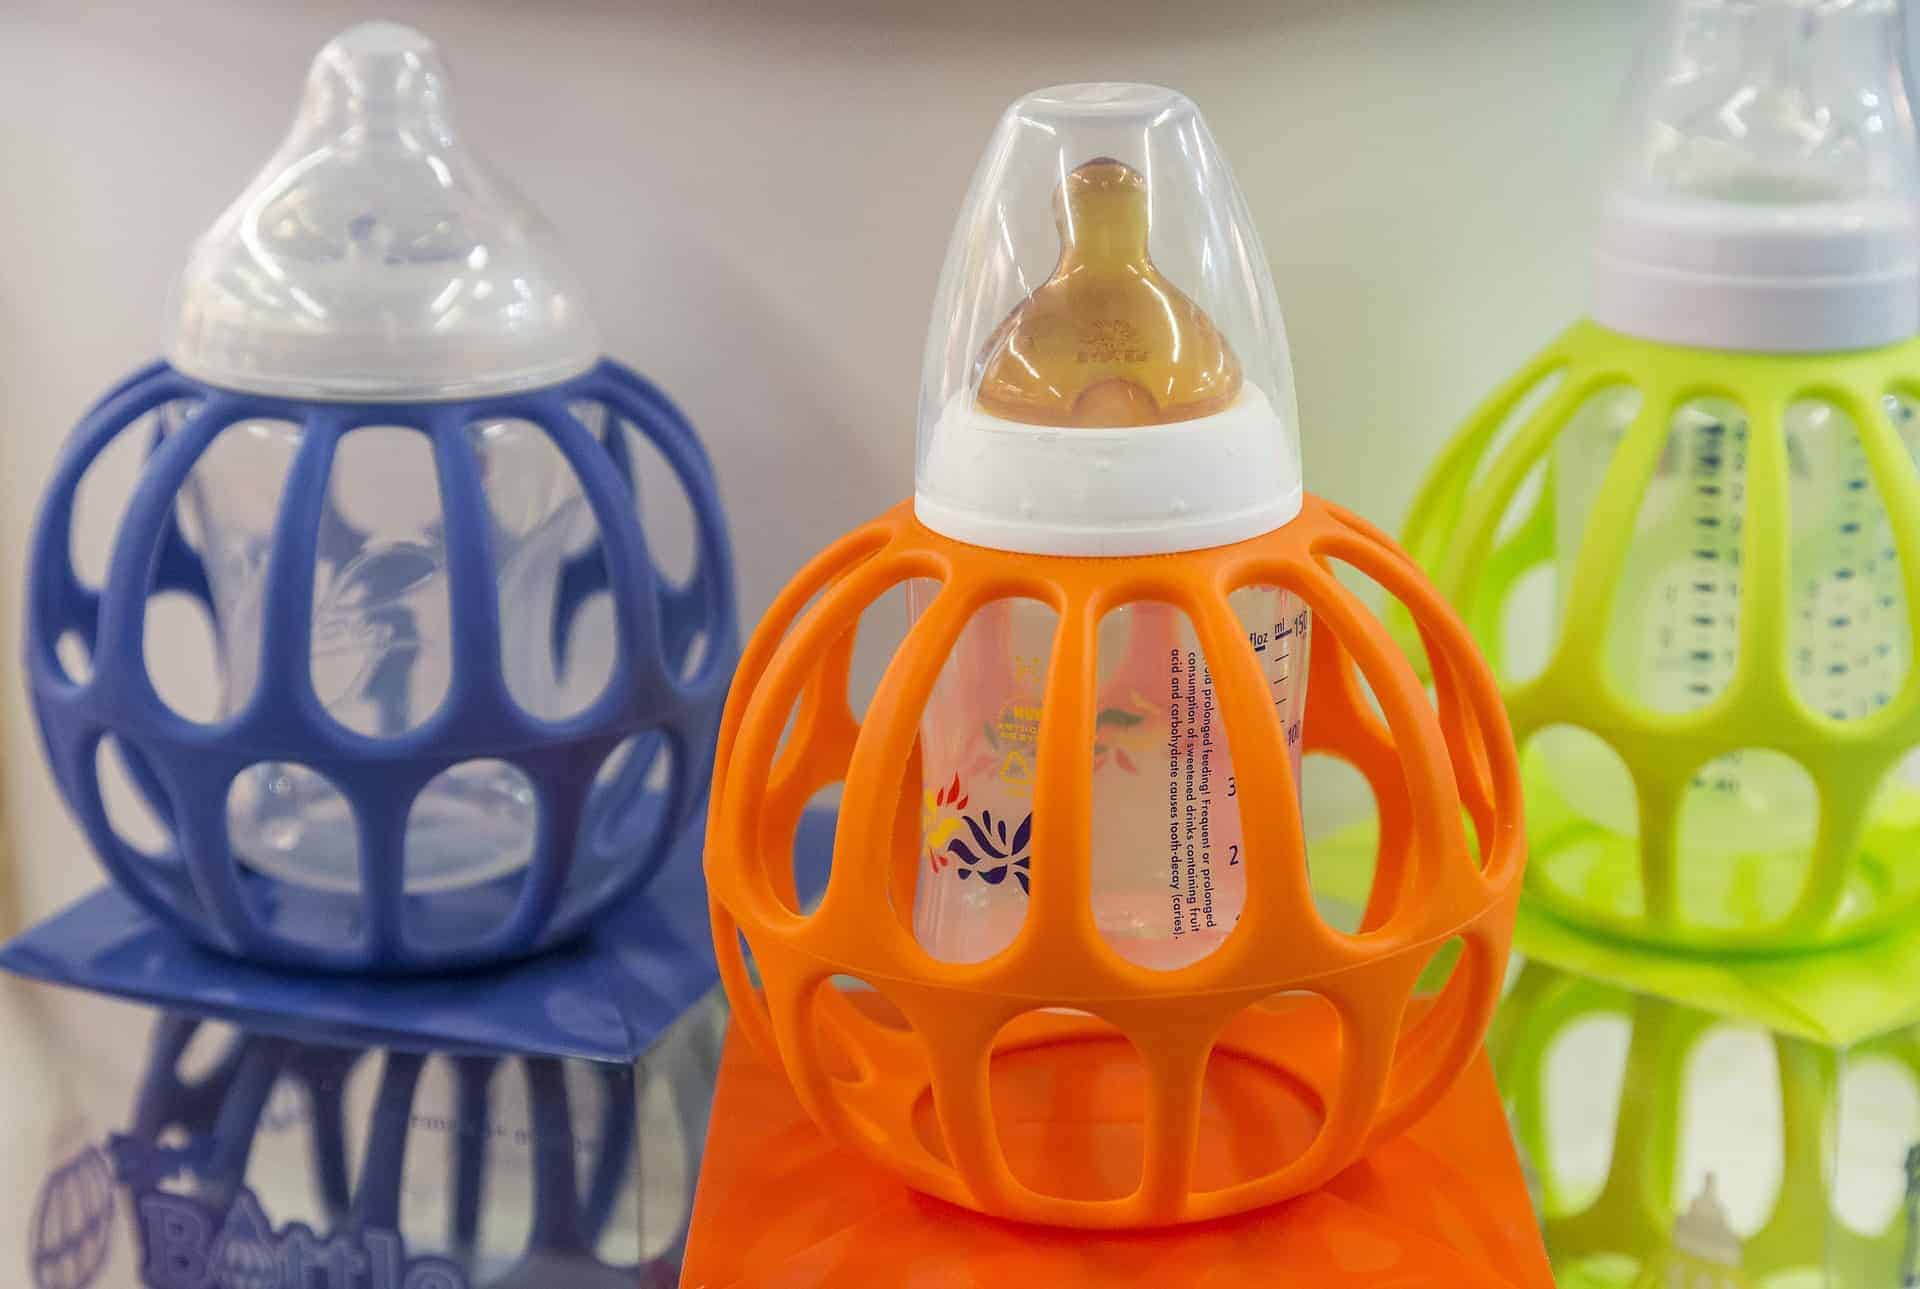 best baby bottle set